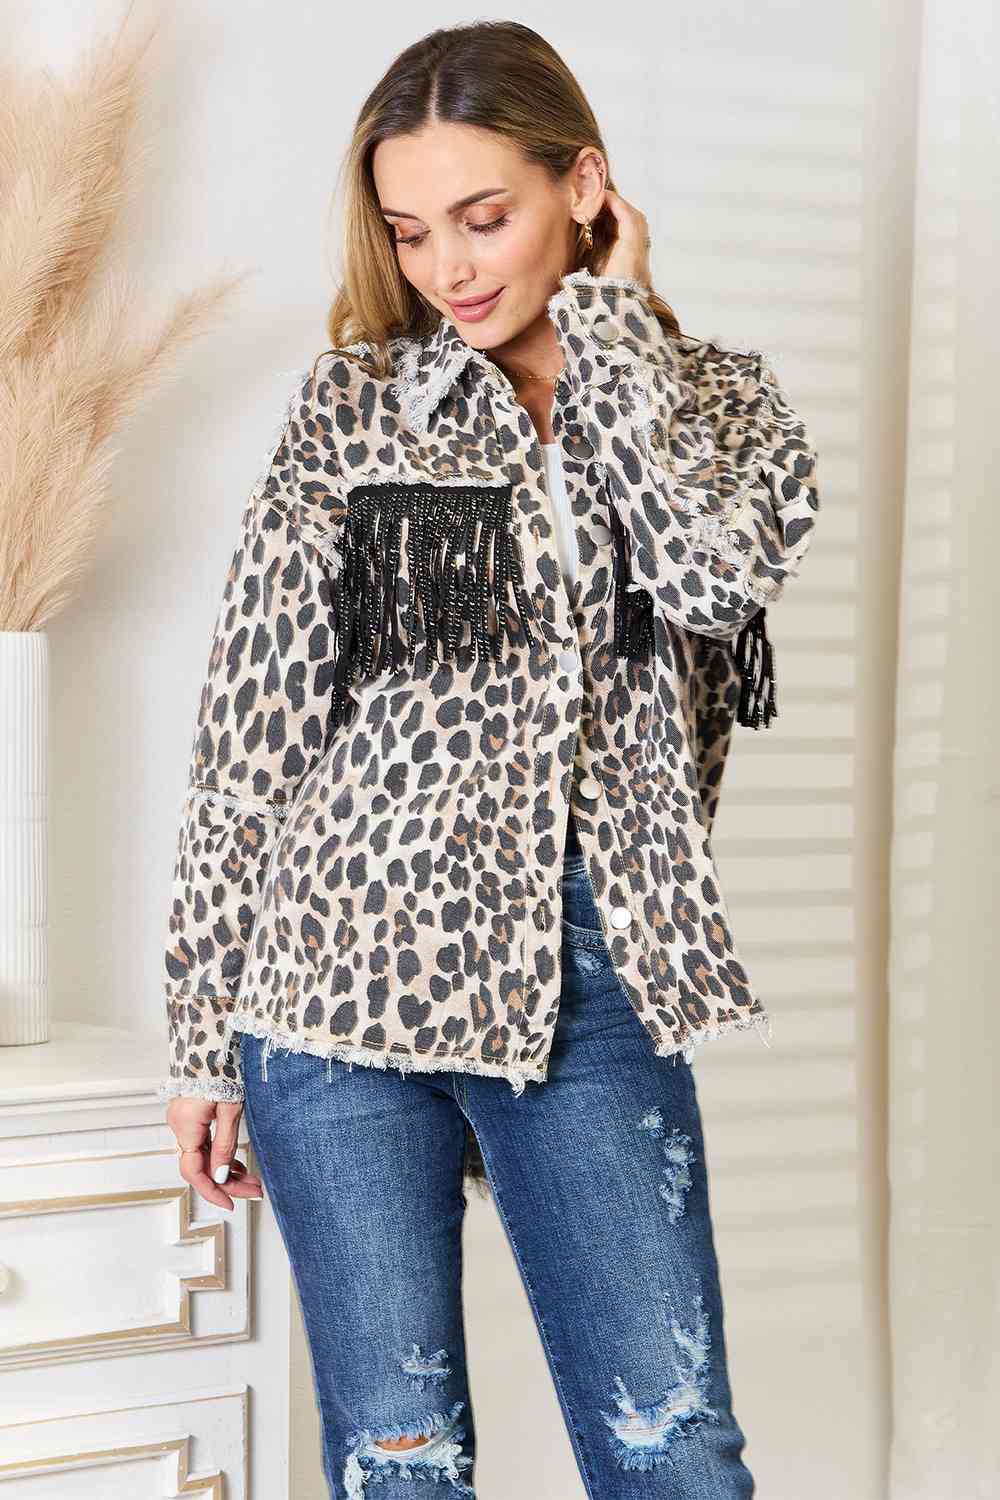 Double Take Leopard Fringe Detail Collared Neck Denim Jacket - Tigbuls Variety Fashion